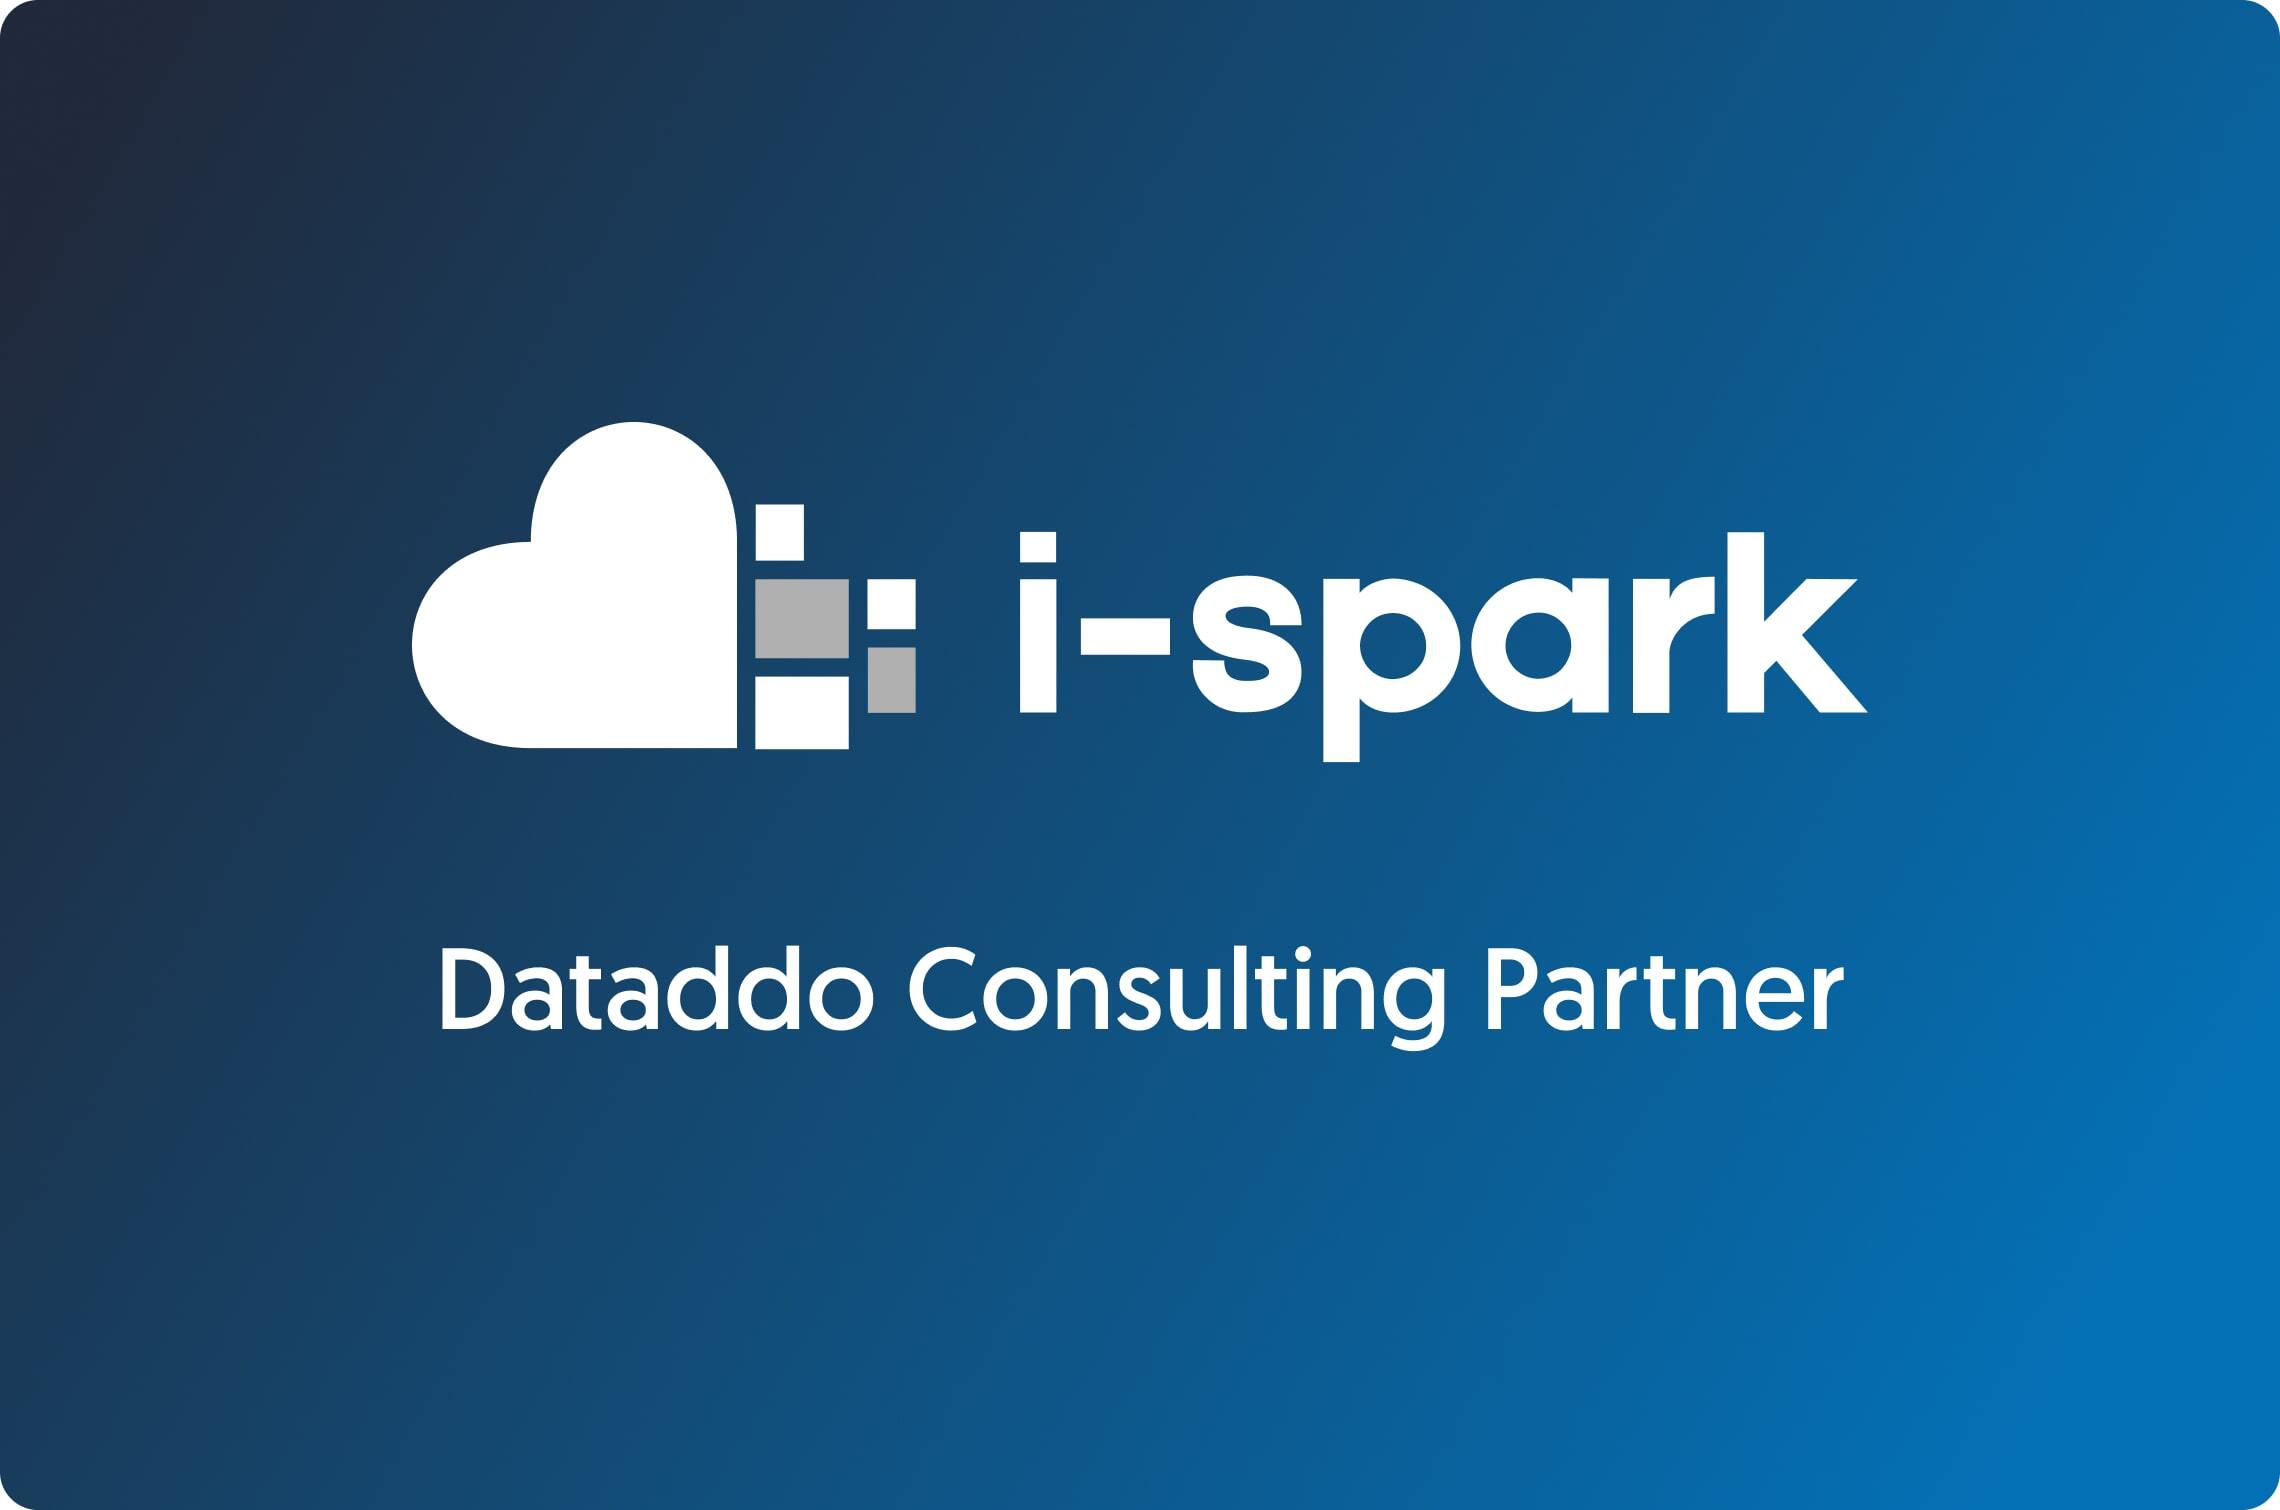 Data Agency i-spark Uses Dataddo for Heavyweight Integrations